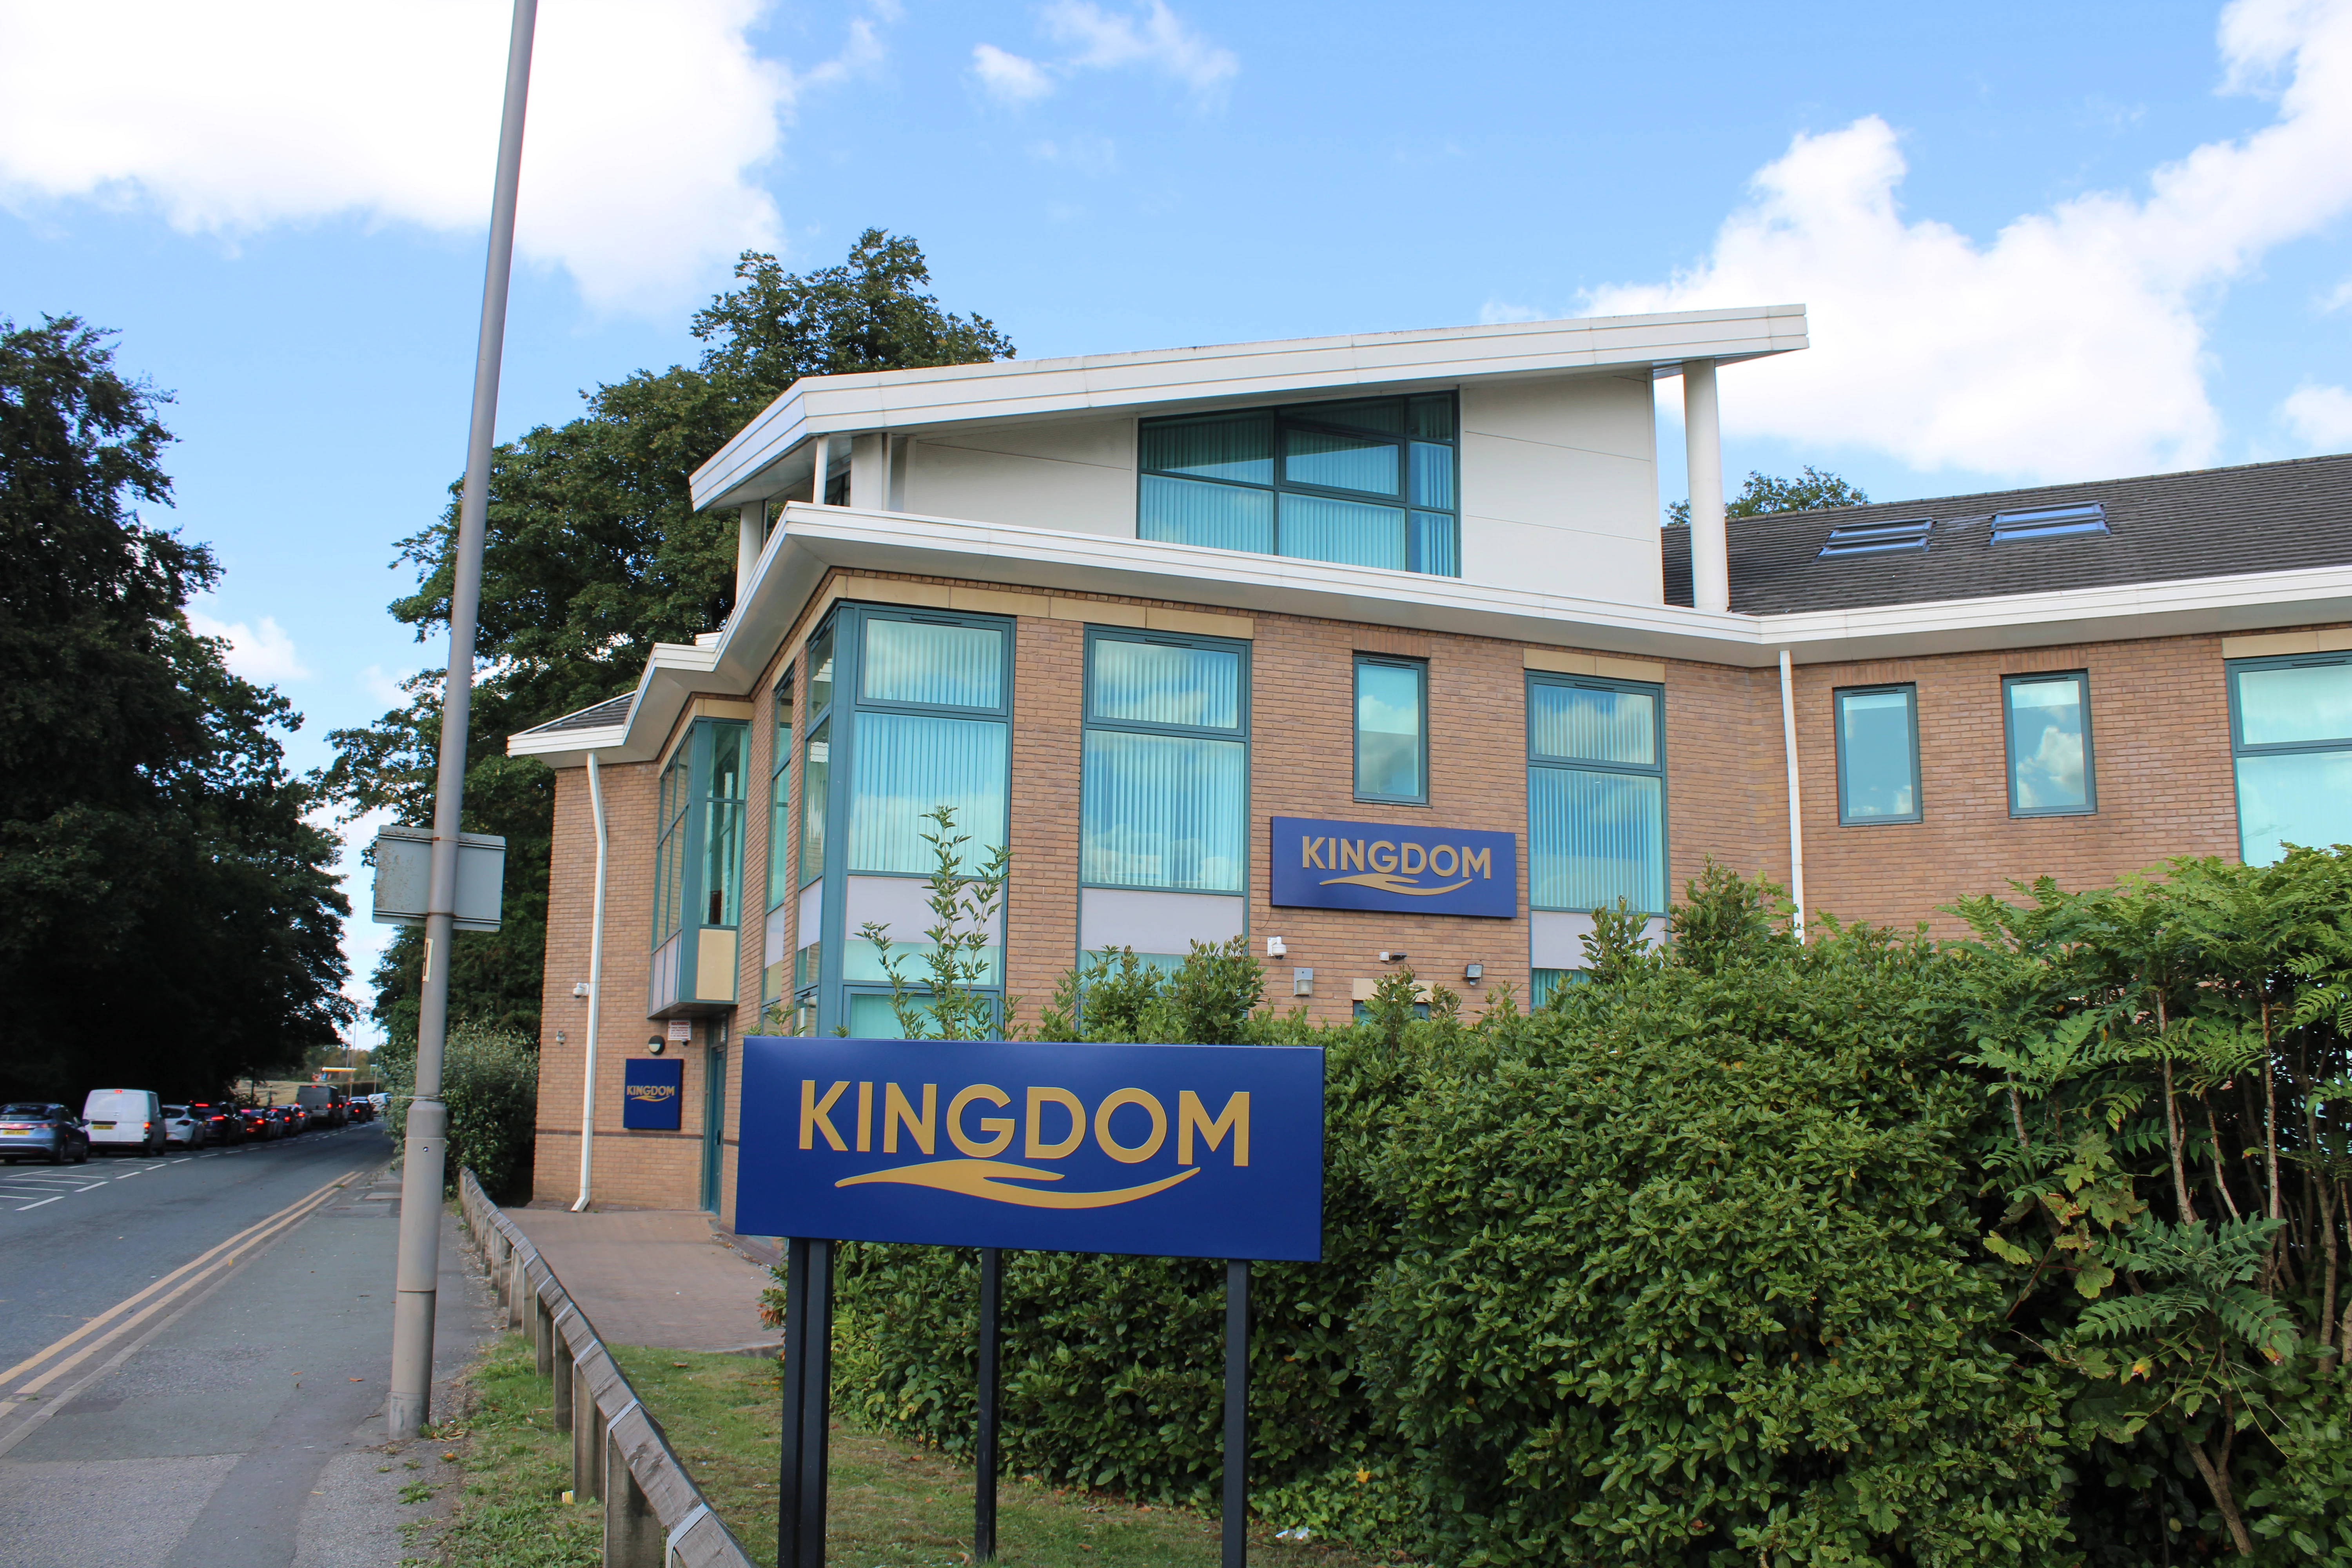 Kingdom's Newton-le-Willows head office